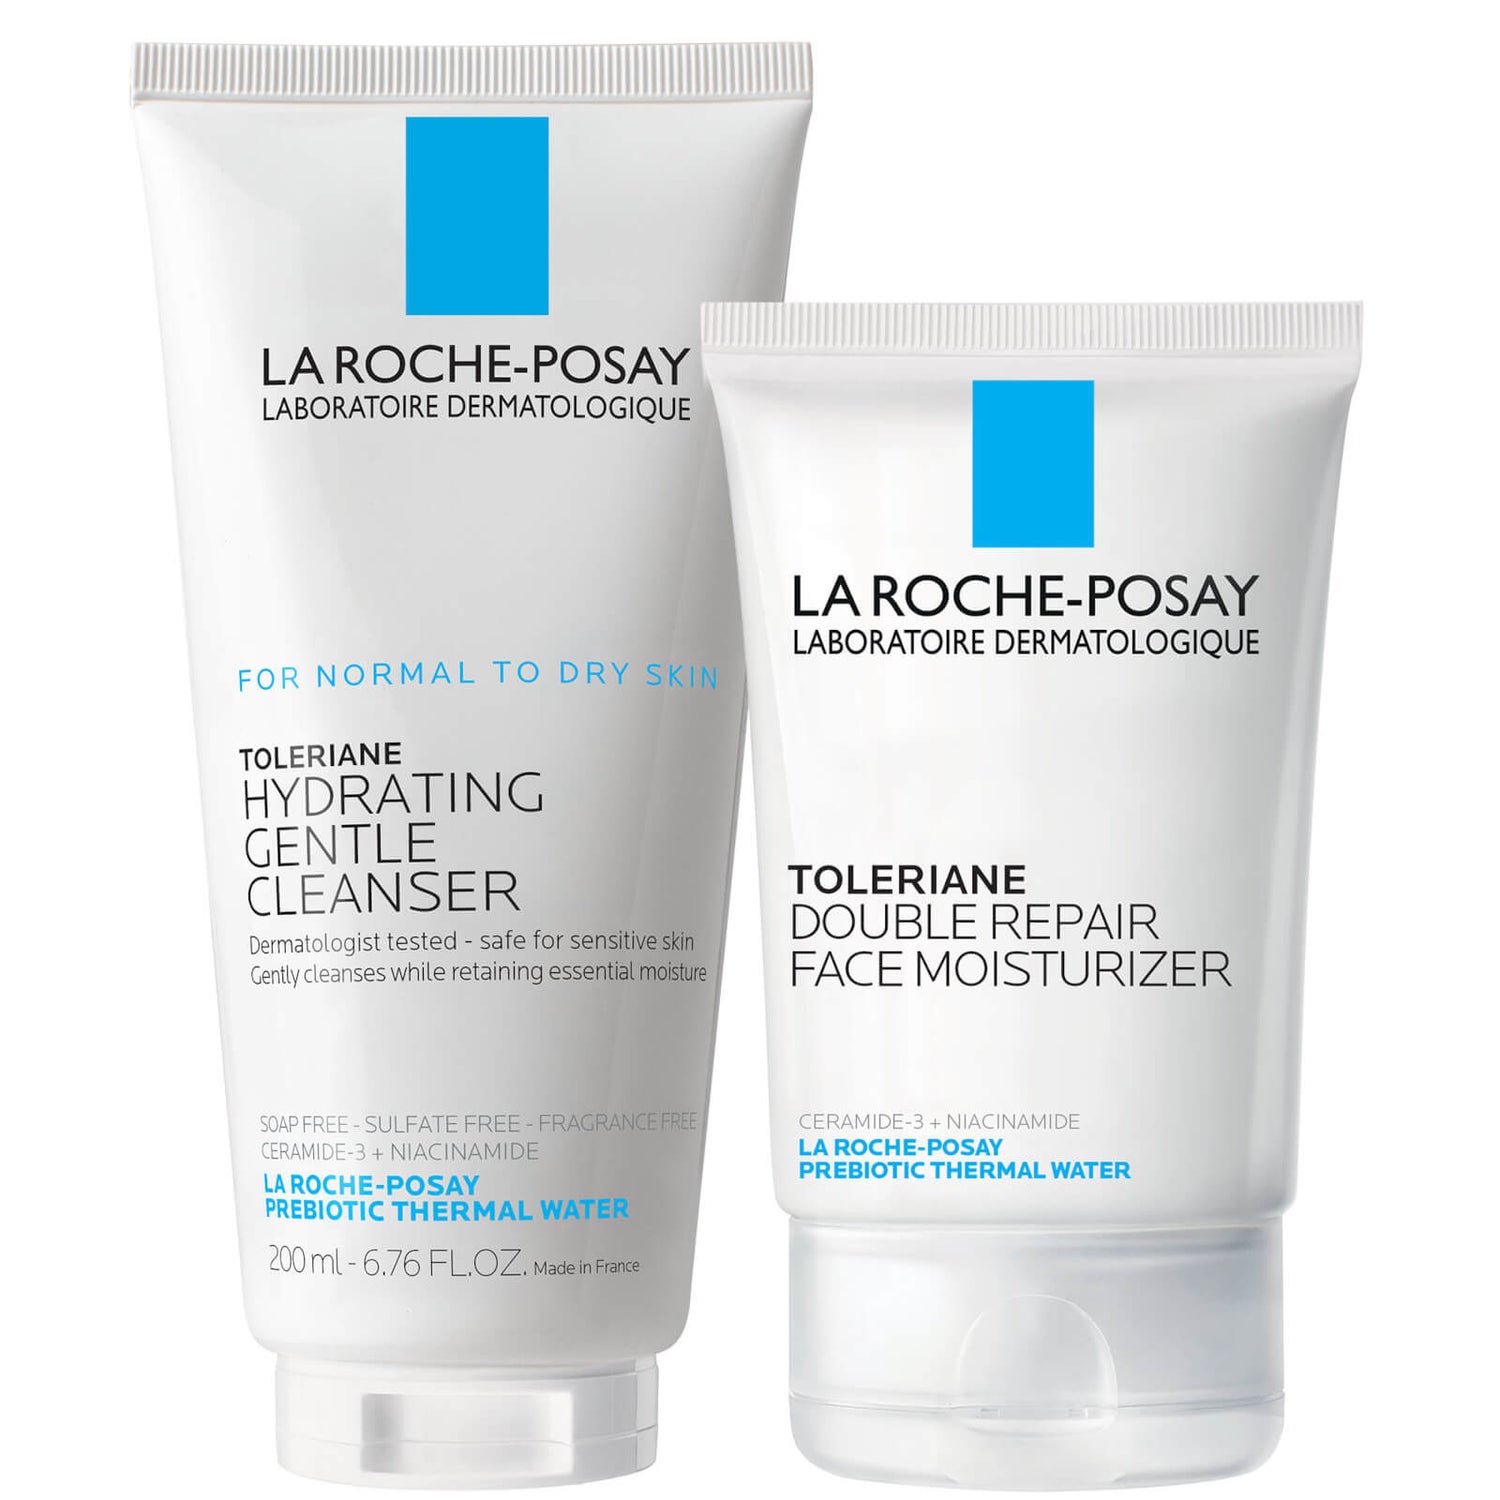 La Roche-Posay Regimen for Normal, Dry Skin (Worth $34.00)